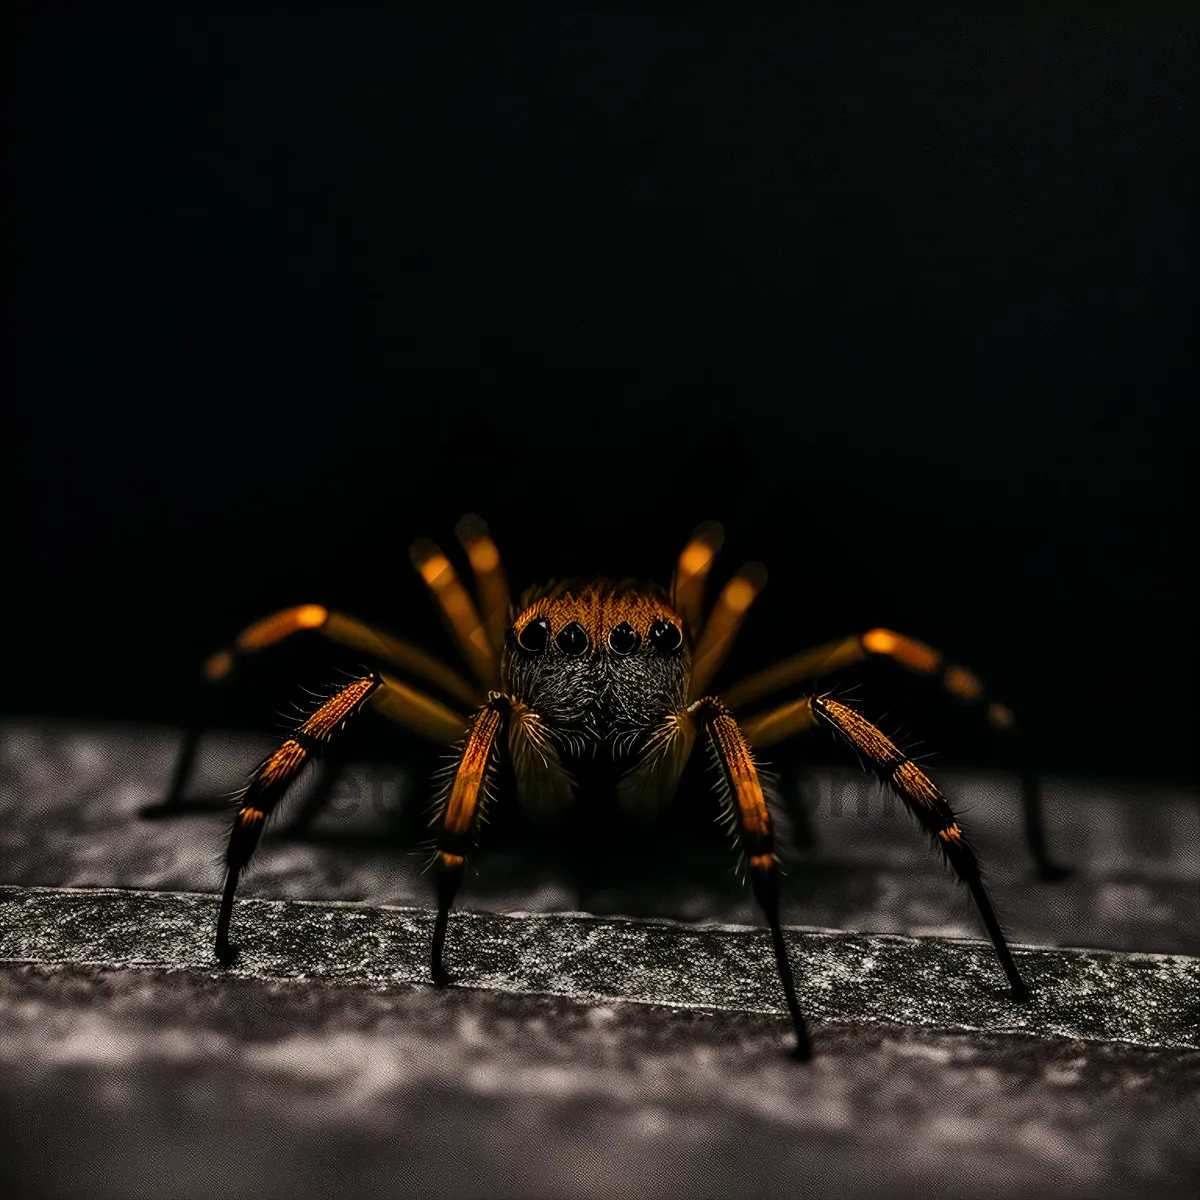 Picture of Garden Spider in Black - Close-up Wildlife Image